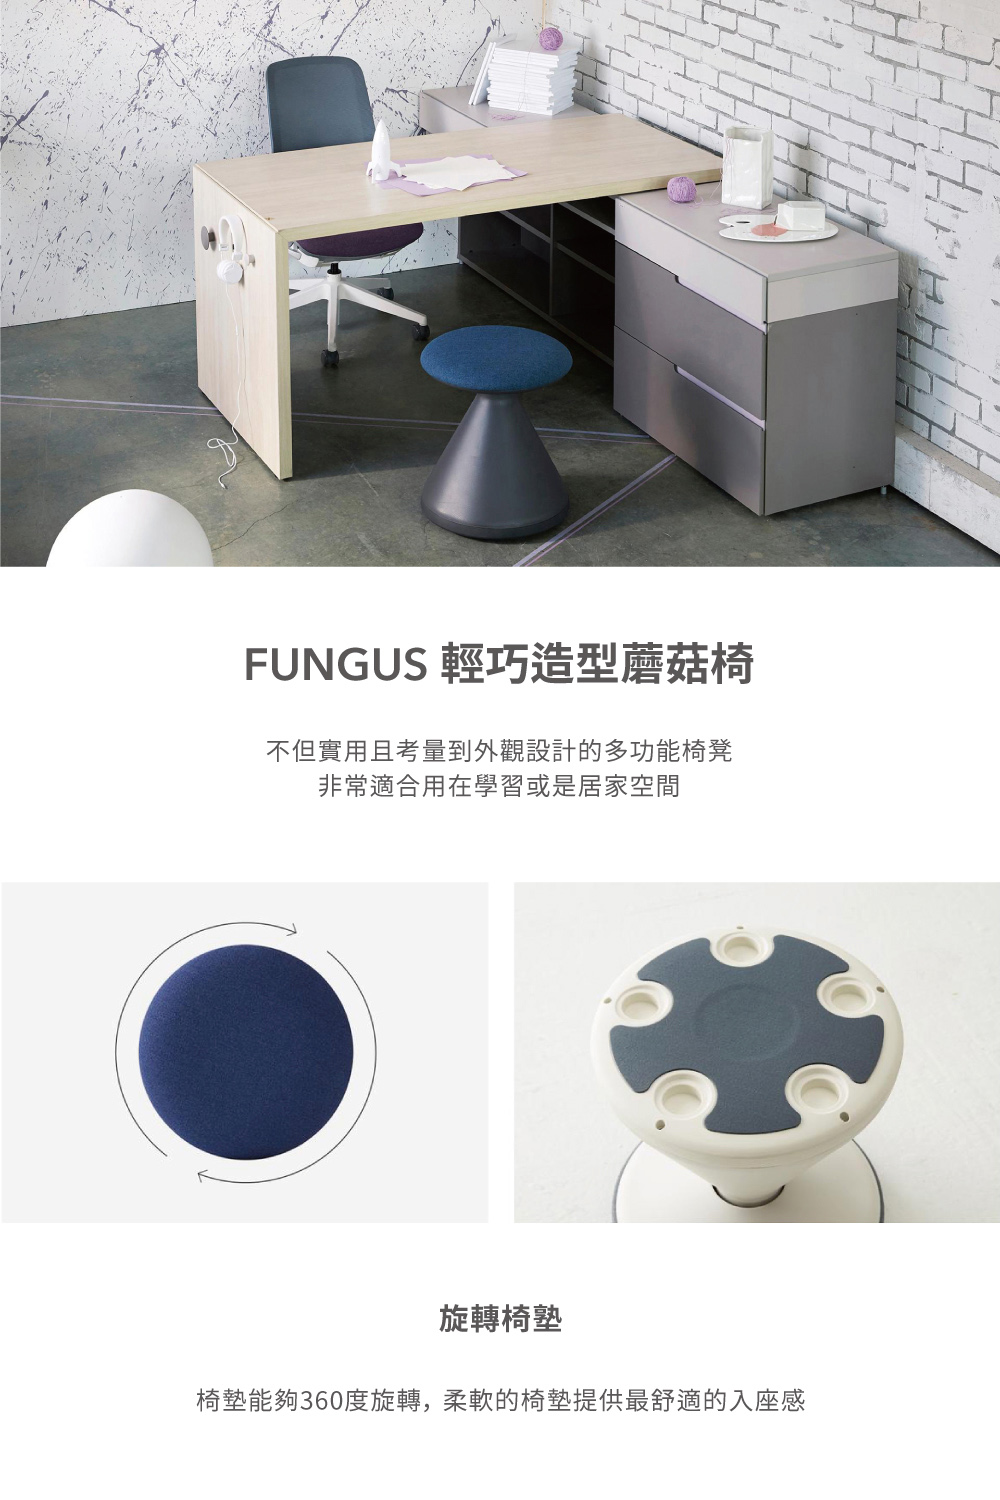 iloom 怡倫家居 FUNGUS 設計師系列輕巧造型蘑菇椅